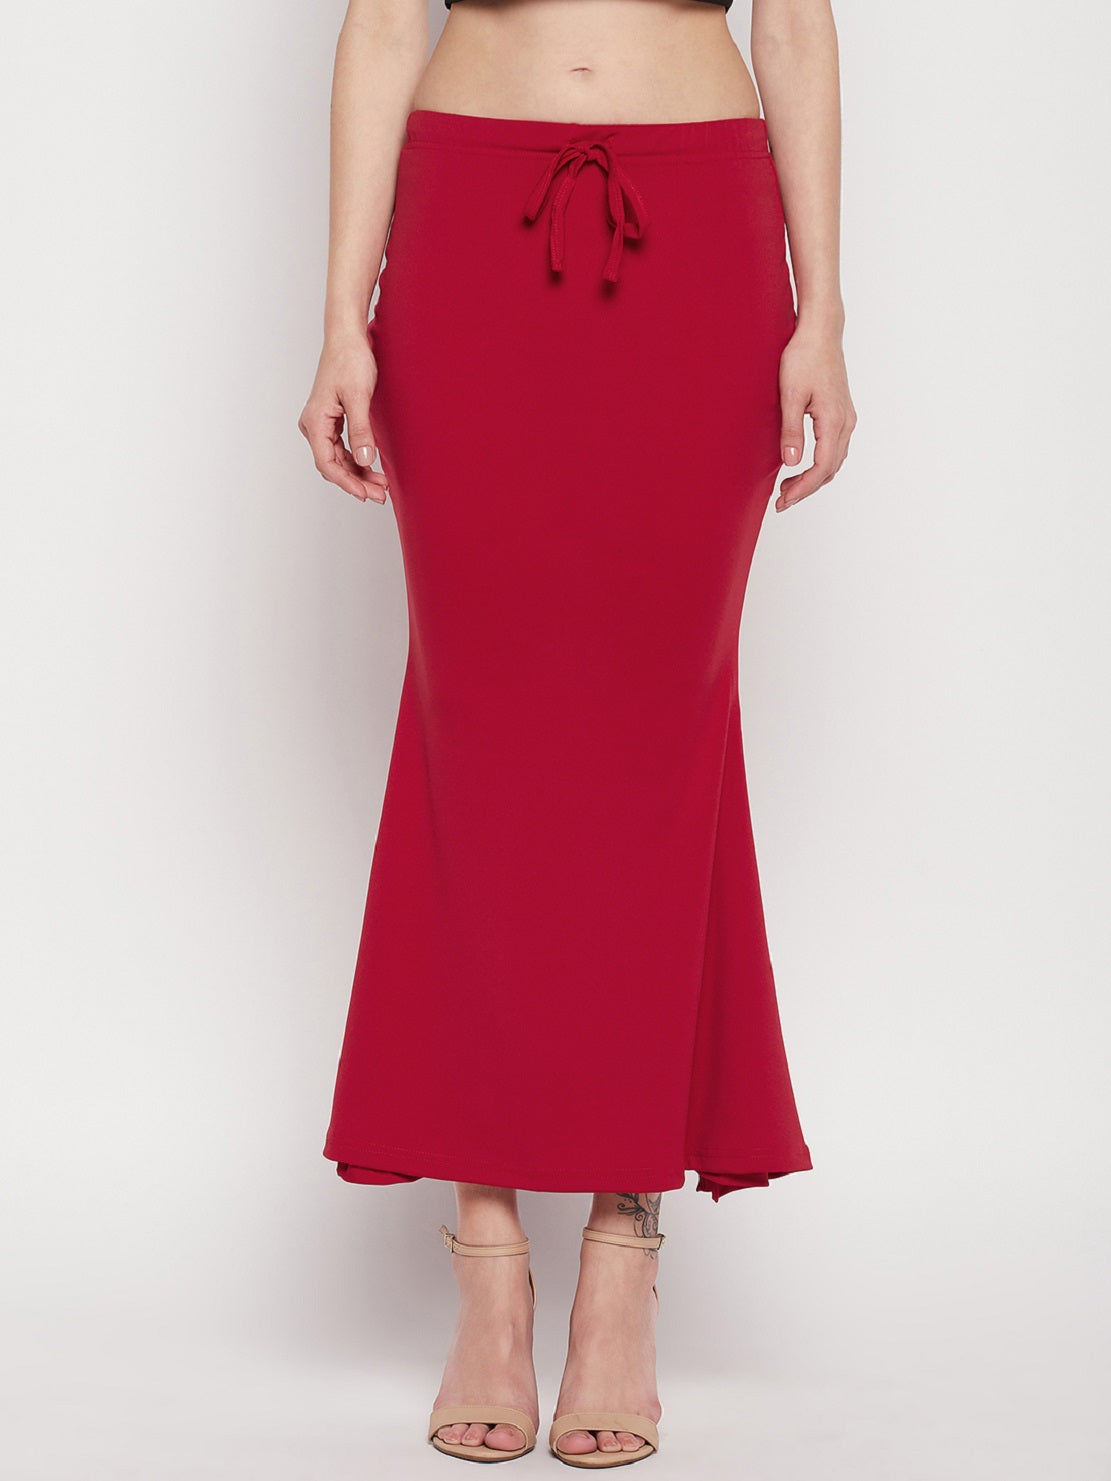 Trendmalls Red Lycra Spandex Saree Shapewear Petticoat for